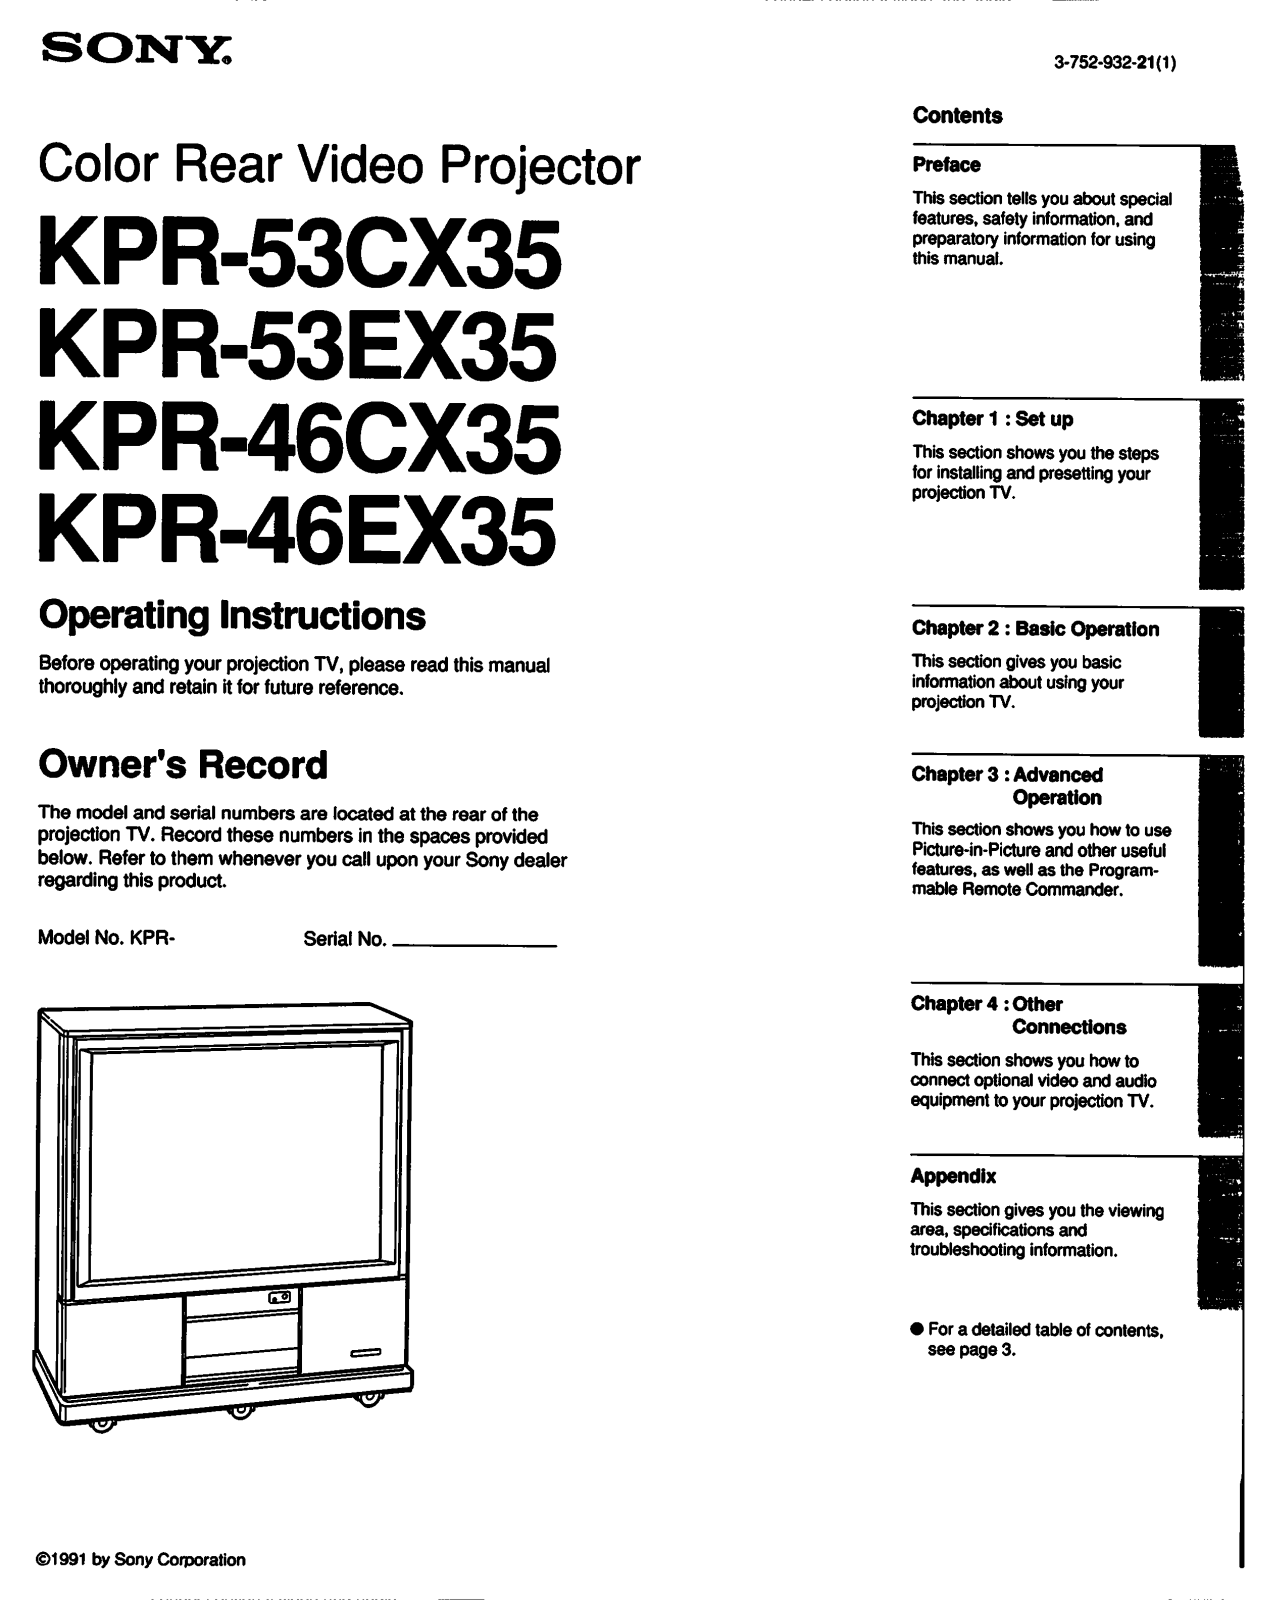 Sony KP-R53EX35, KP-R46CX35, KP-R46EX35 Operating Manual